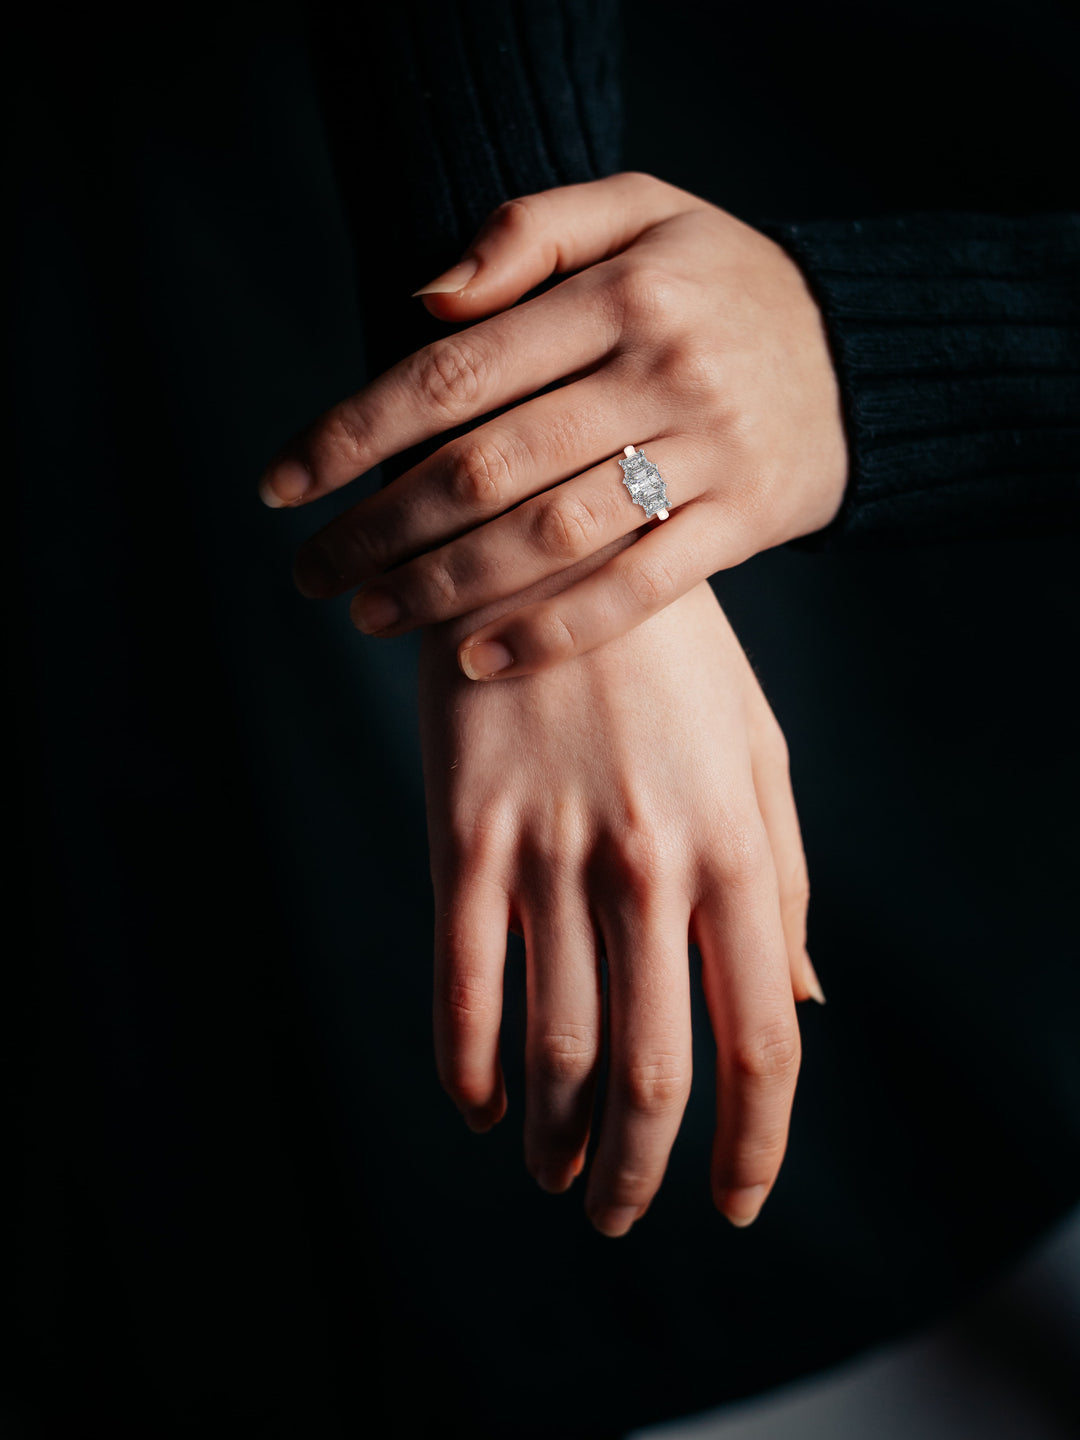 2 Carat Diamond Ring. Trilogy radiant cut diamond ring on rose gold band on woman's hand